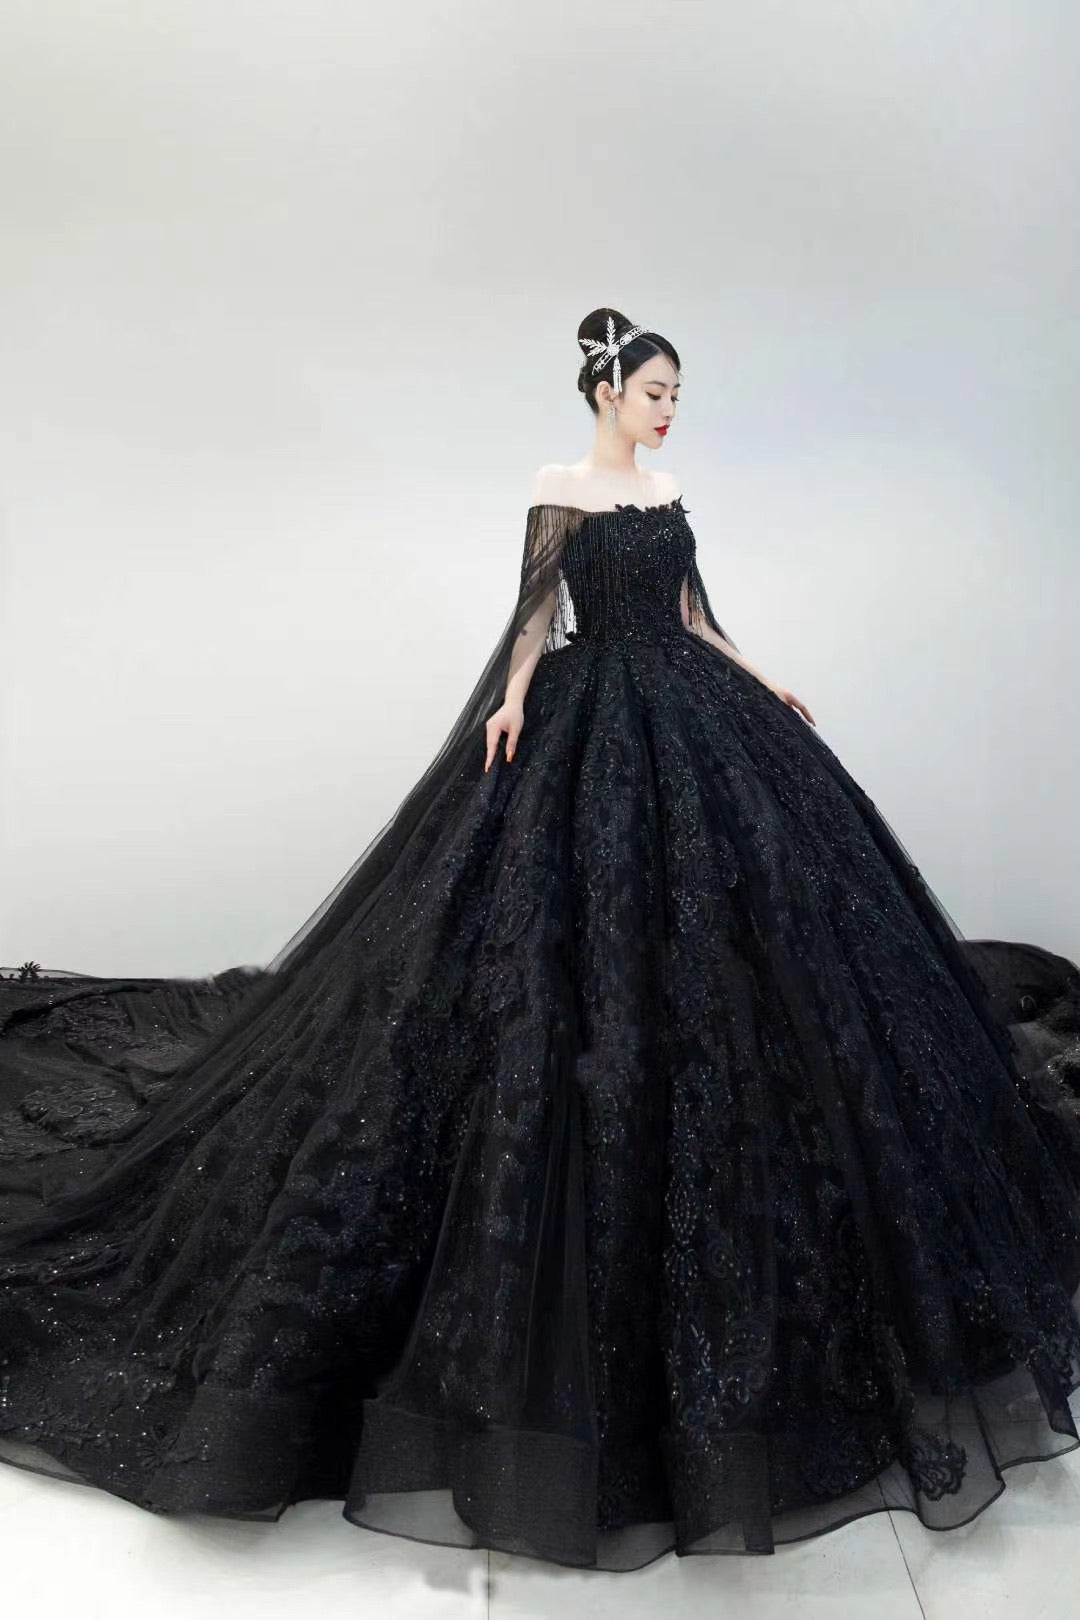 30 Black Wedding Dresses We Love for the Alternative Bride